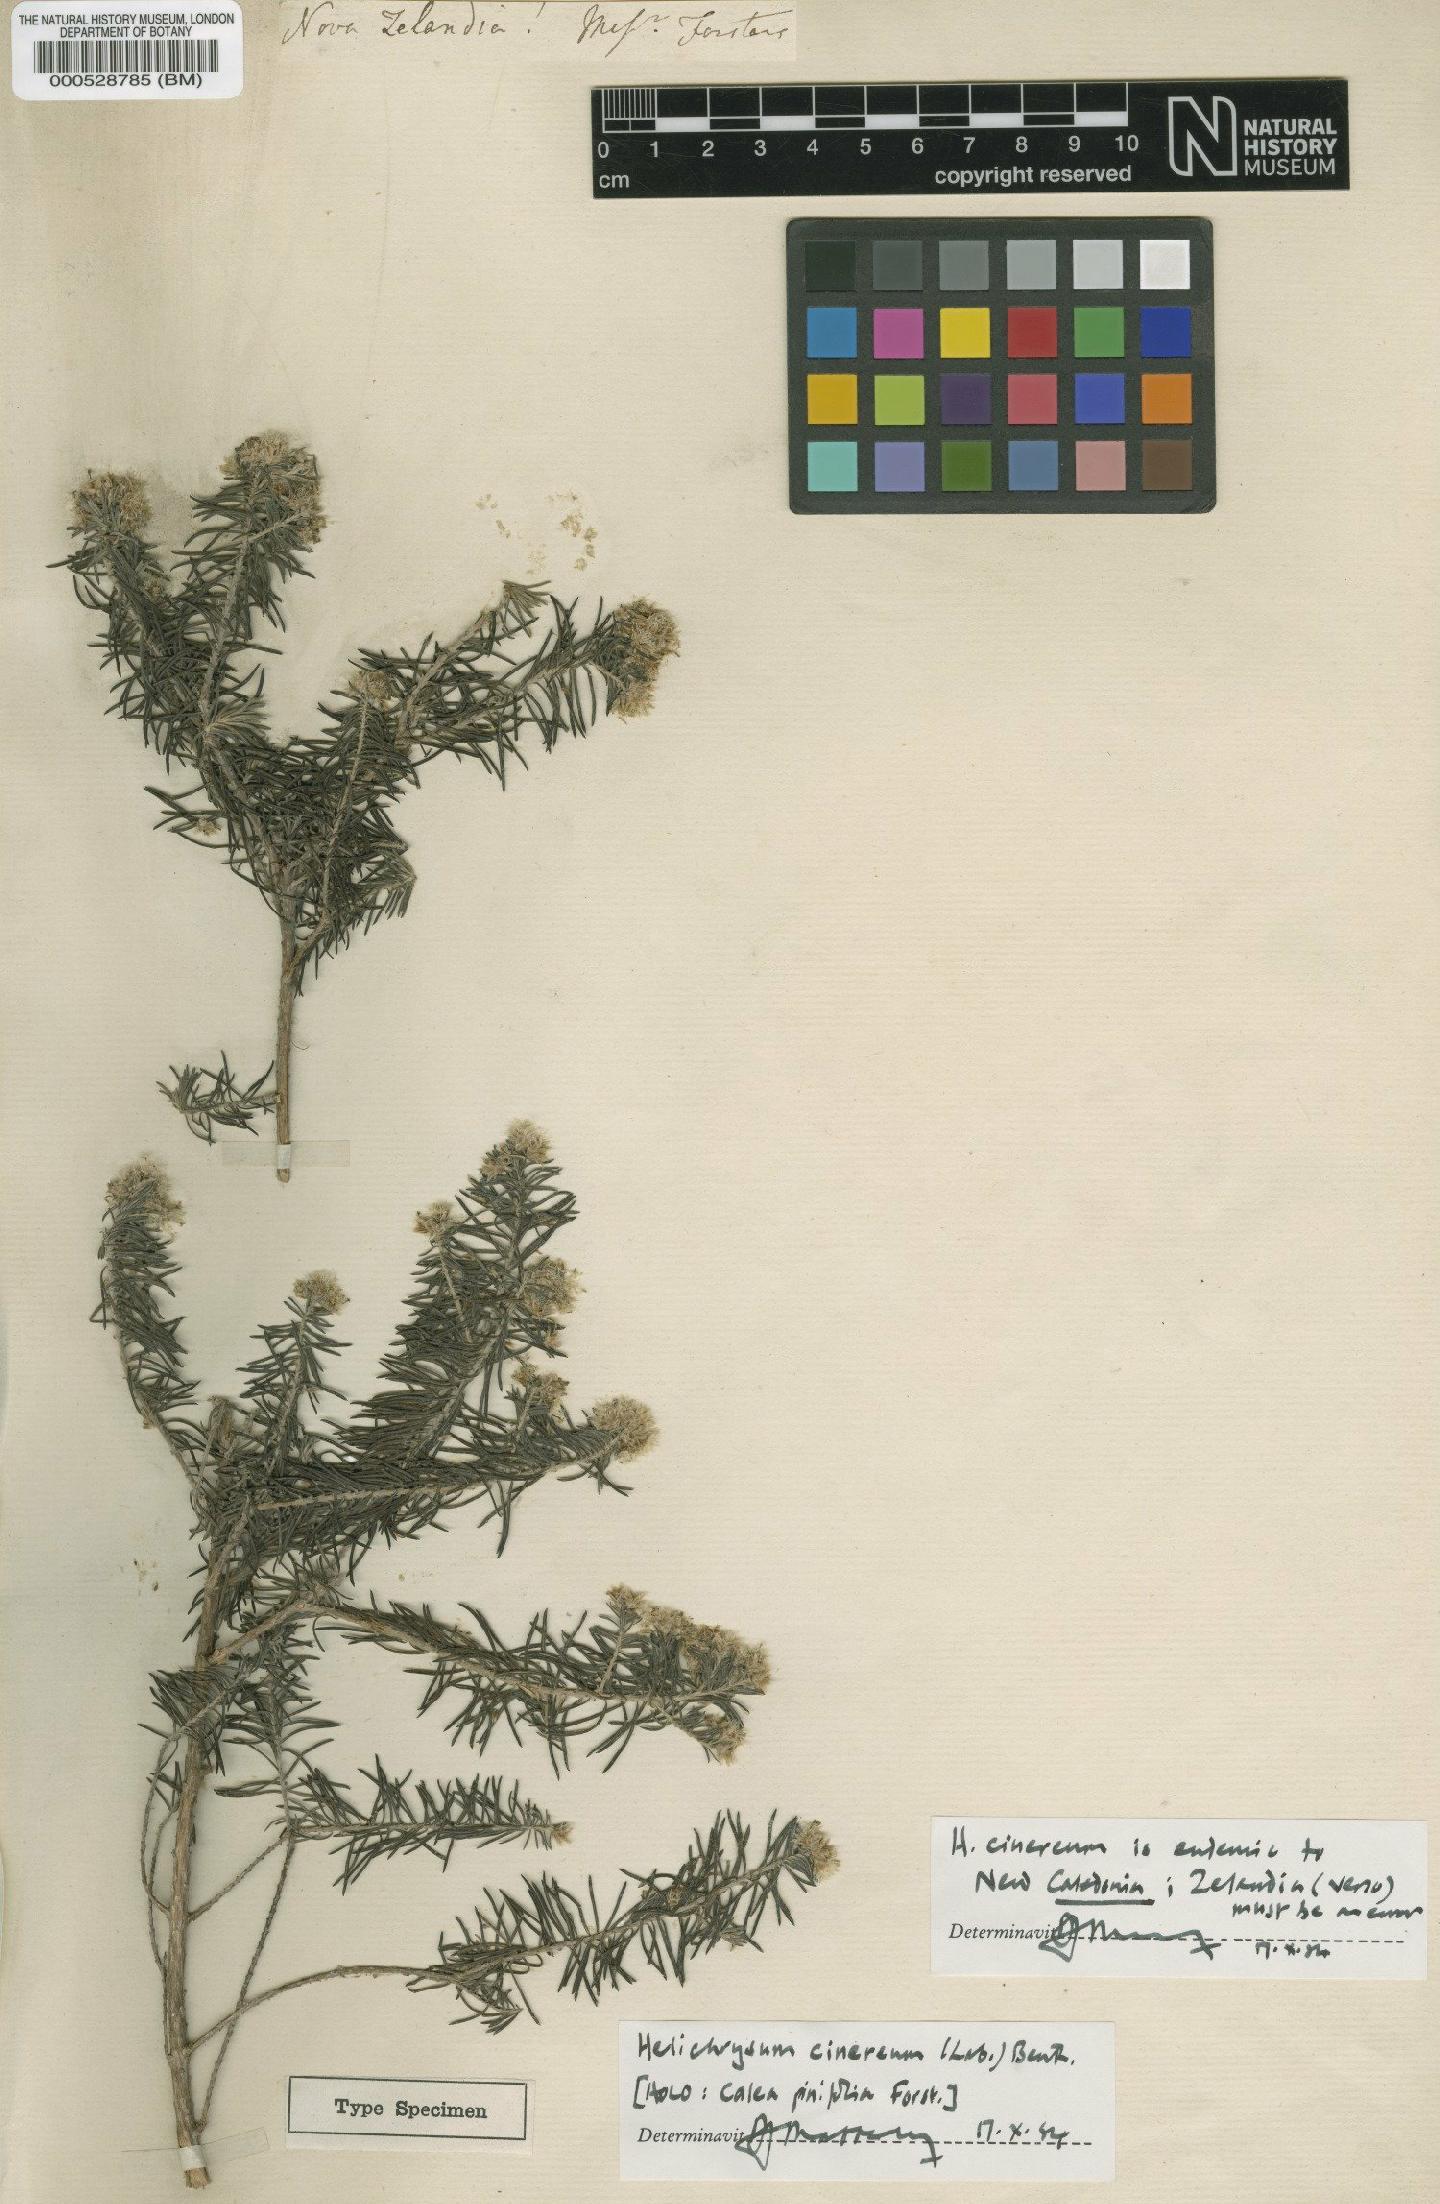 To NHMUK collection (Helichrysum cinereum (Labill.) Benth.; Holotype; NHMUK:ecatalogue:4977257)